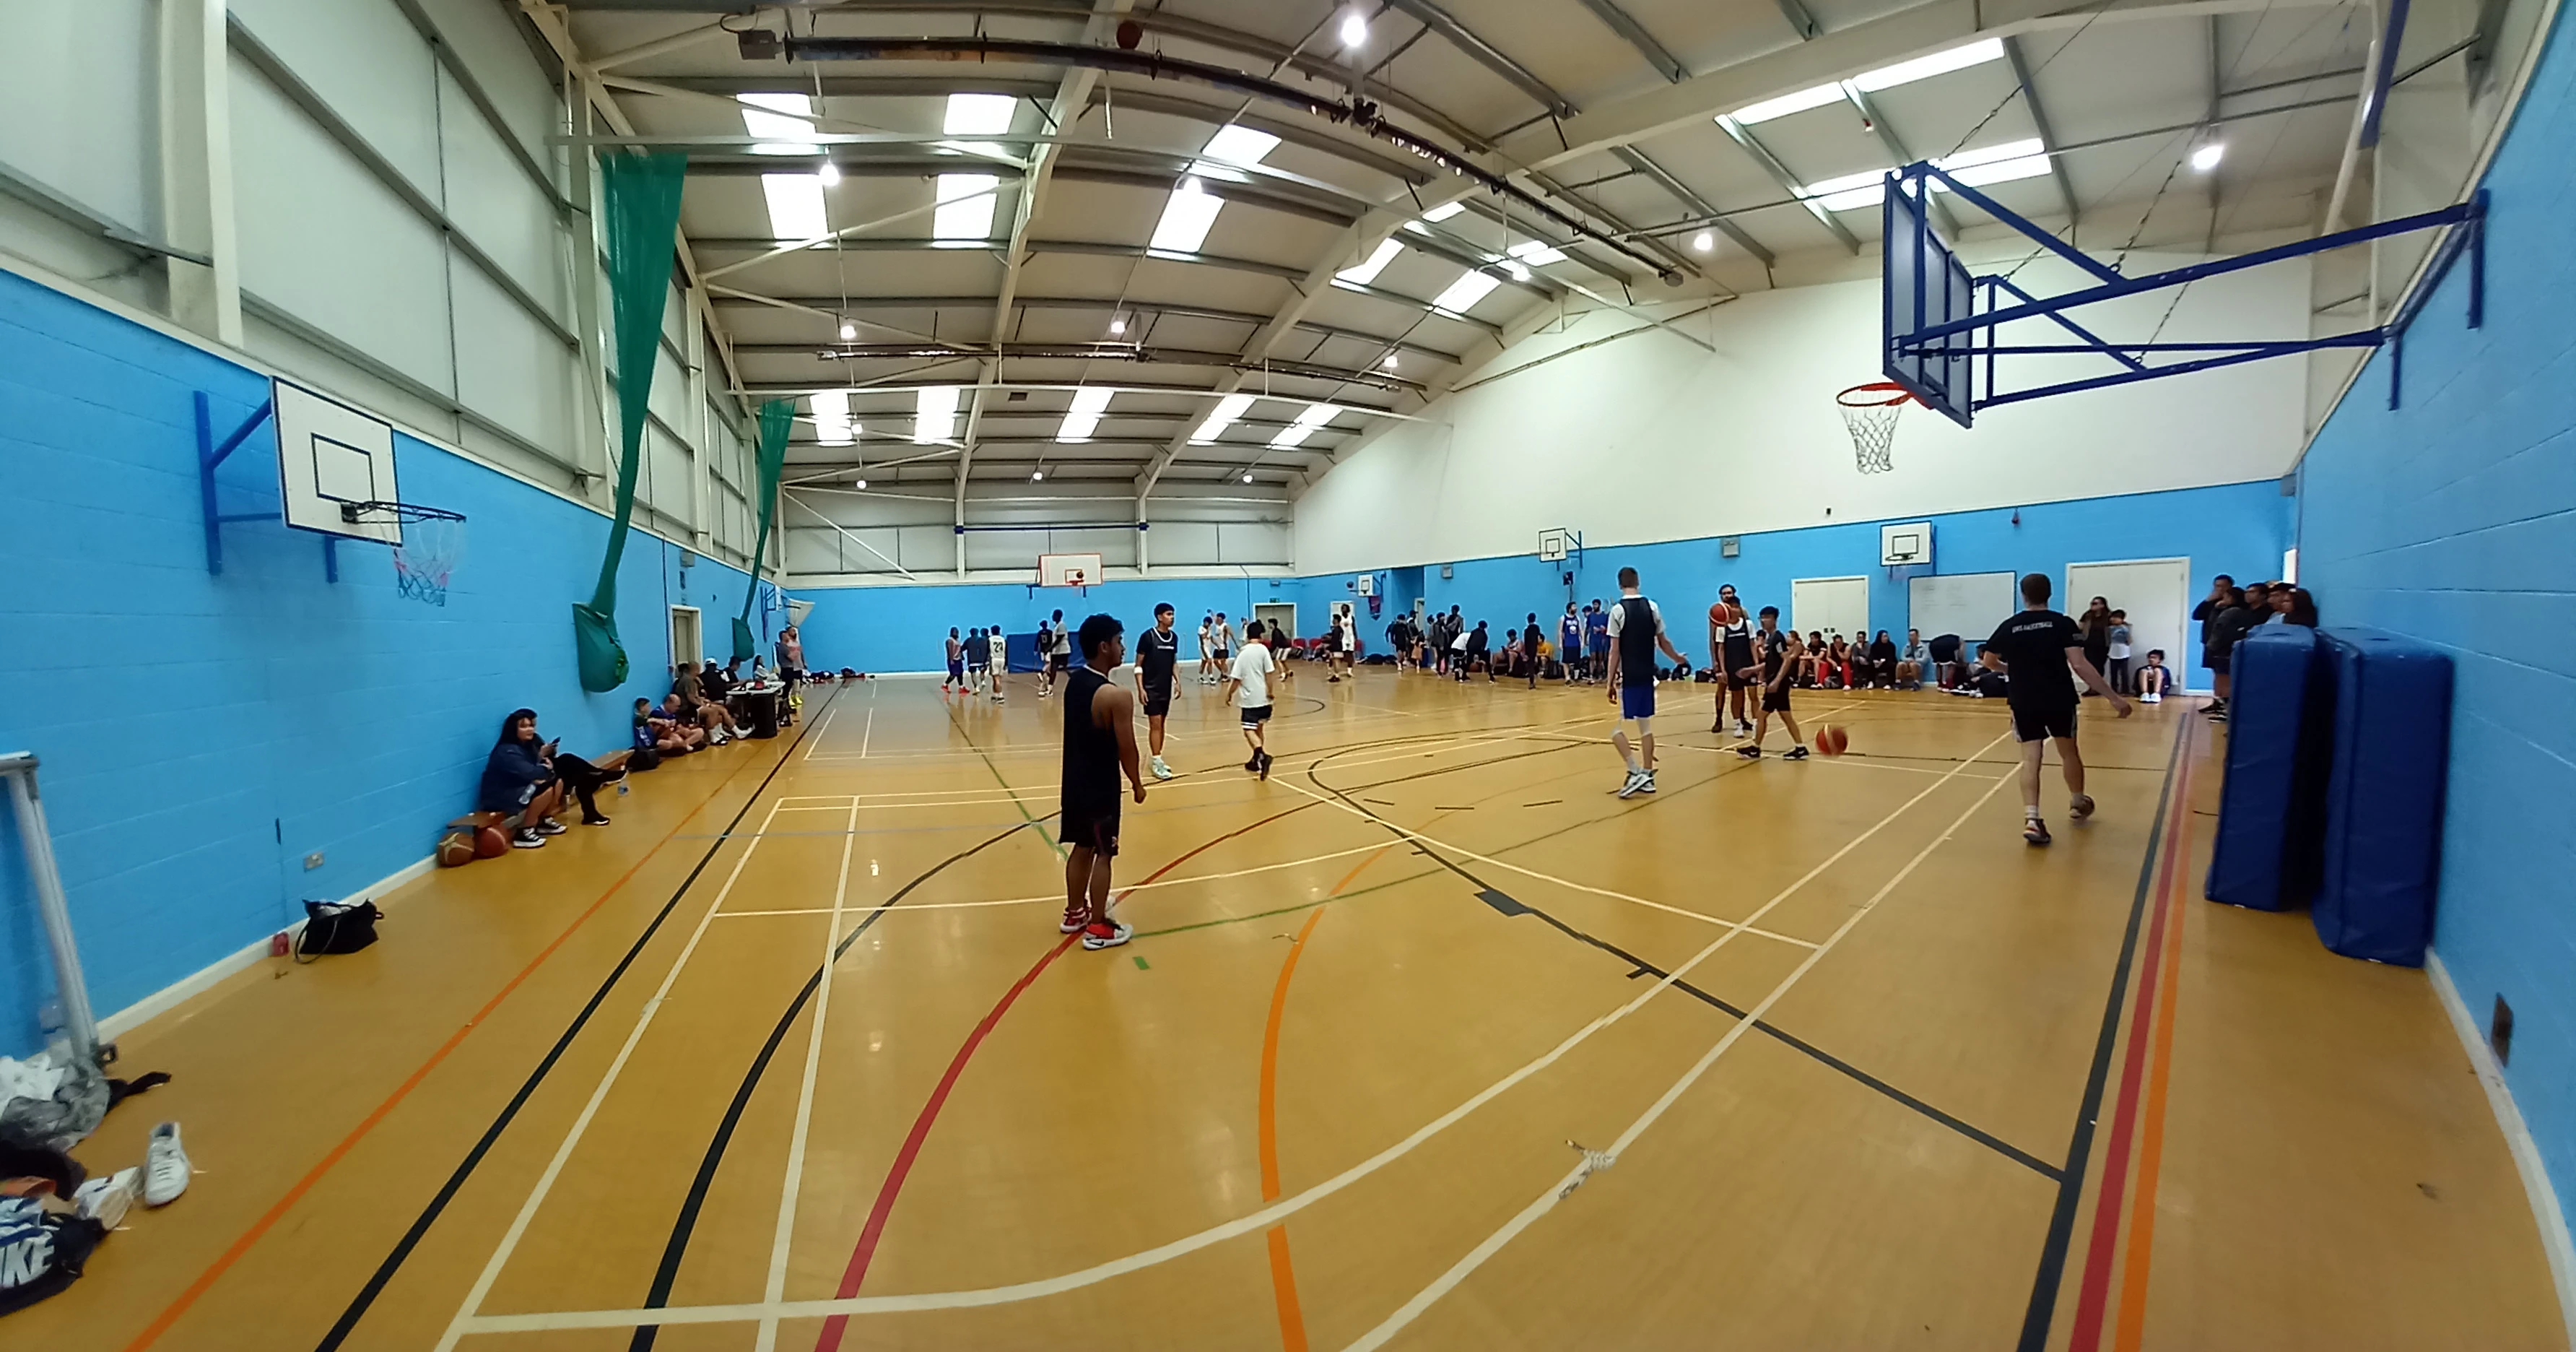 Sunderland Basketball Court: Lambton street youth and community centre ...